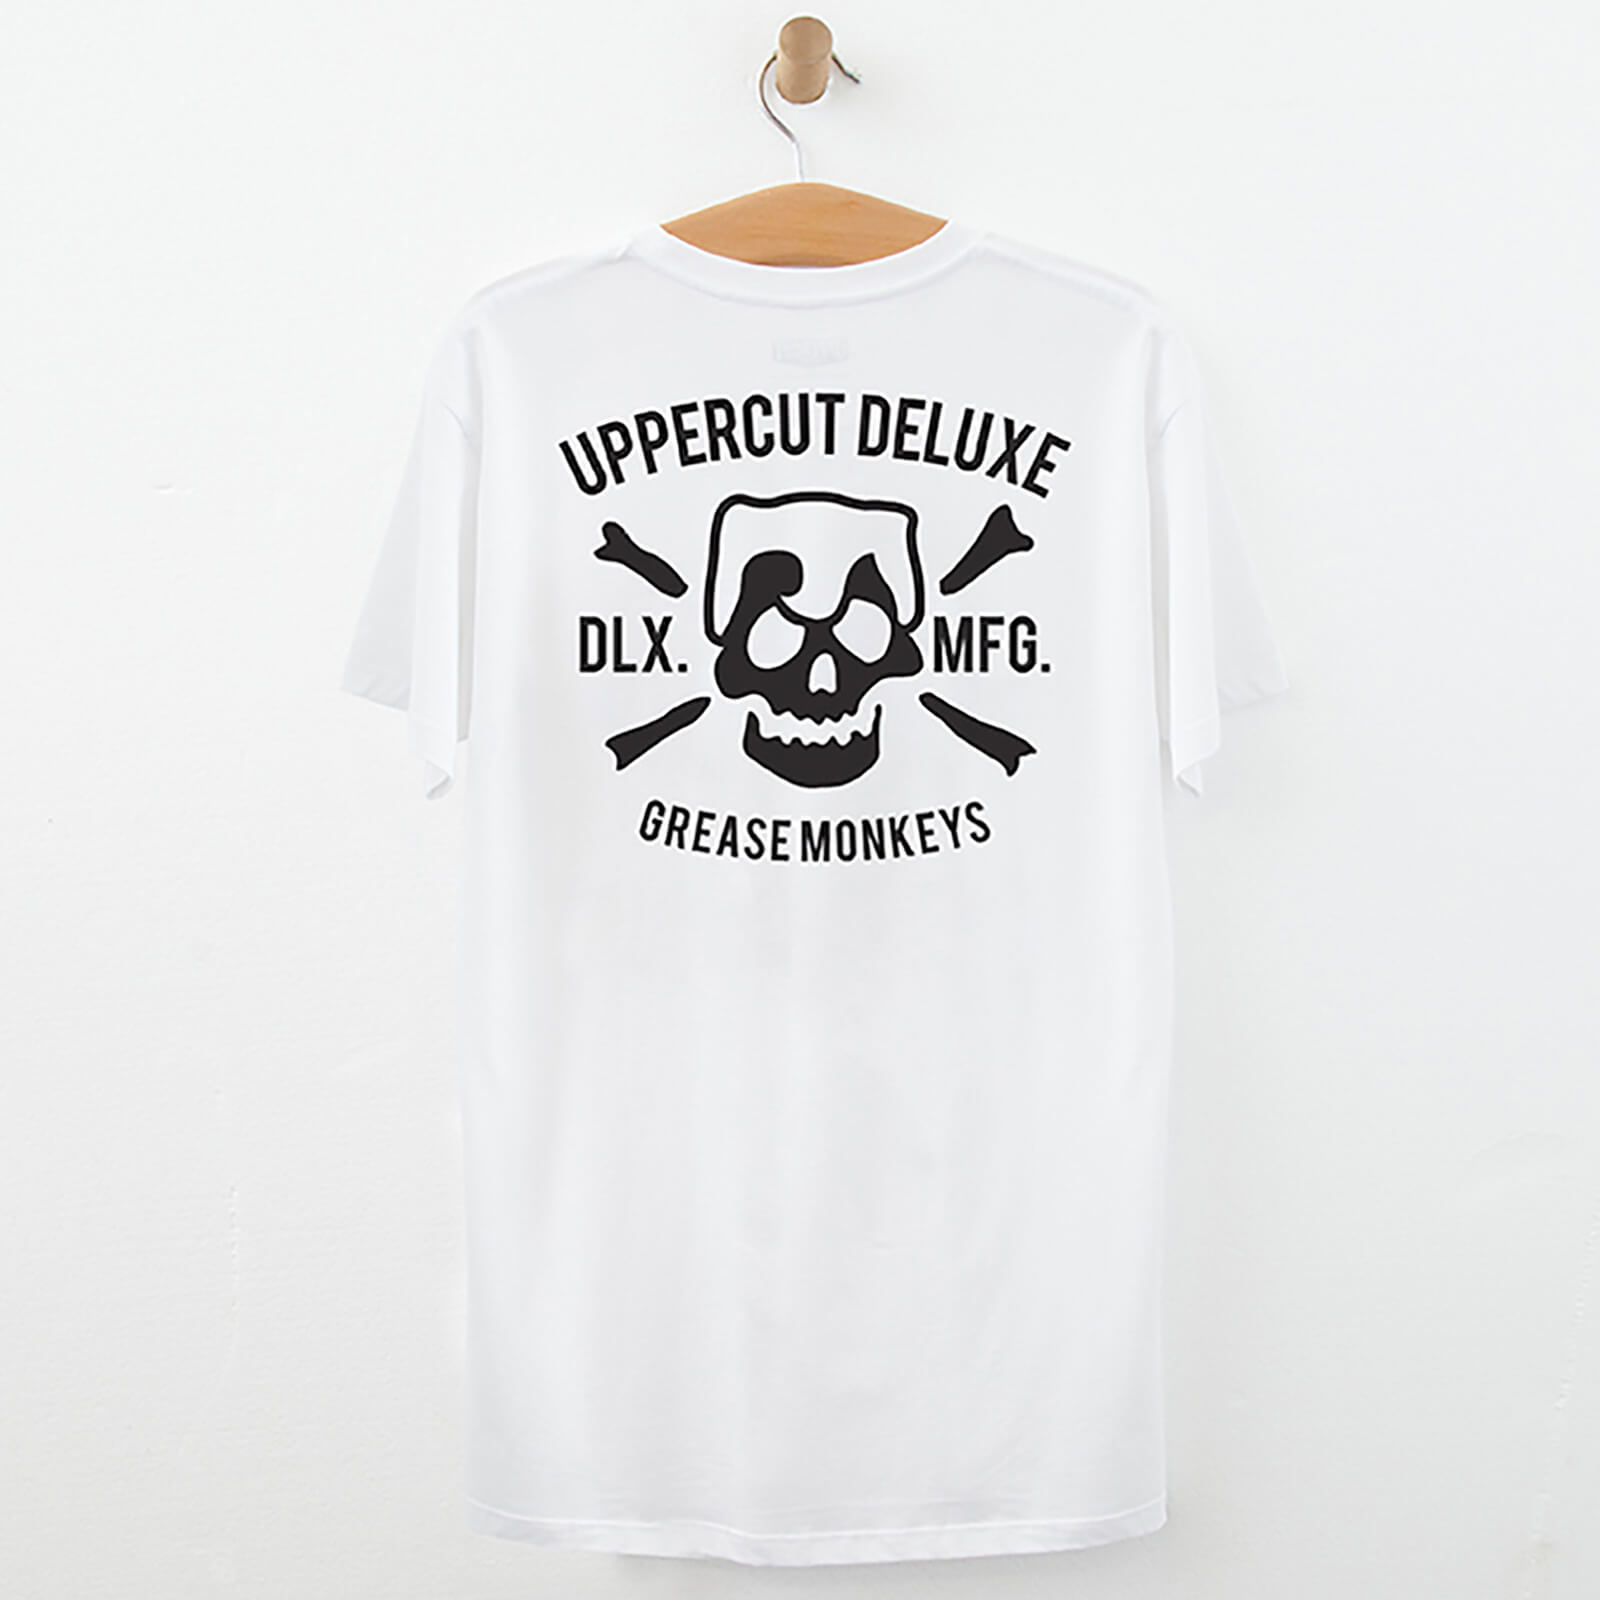 Uppercut Grease Monkey Lives T-Shirt - White/Black Print